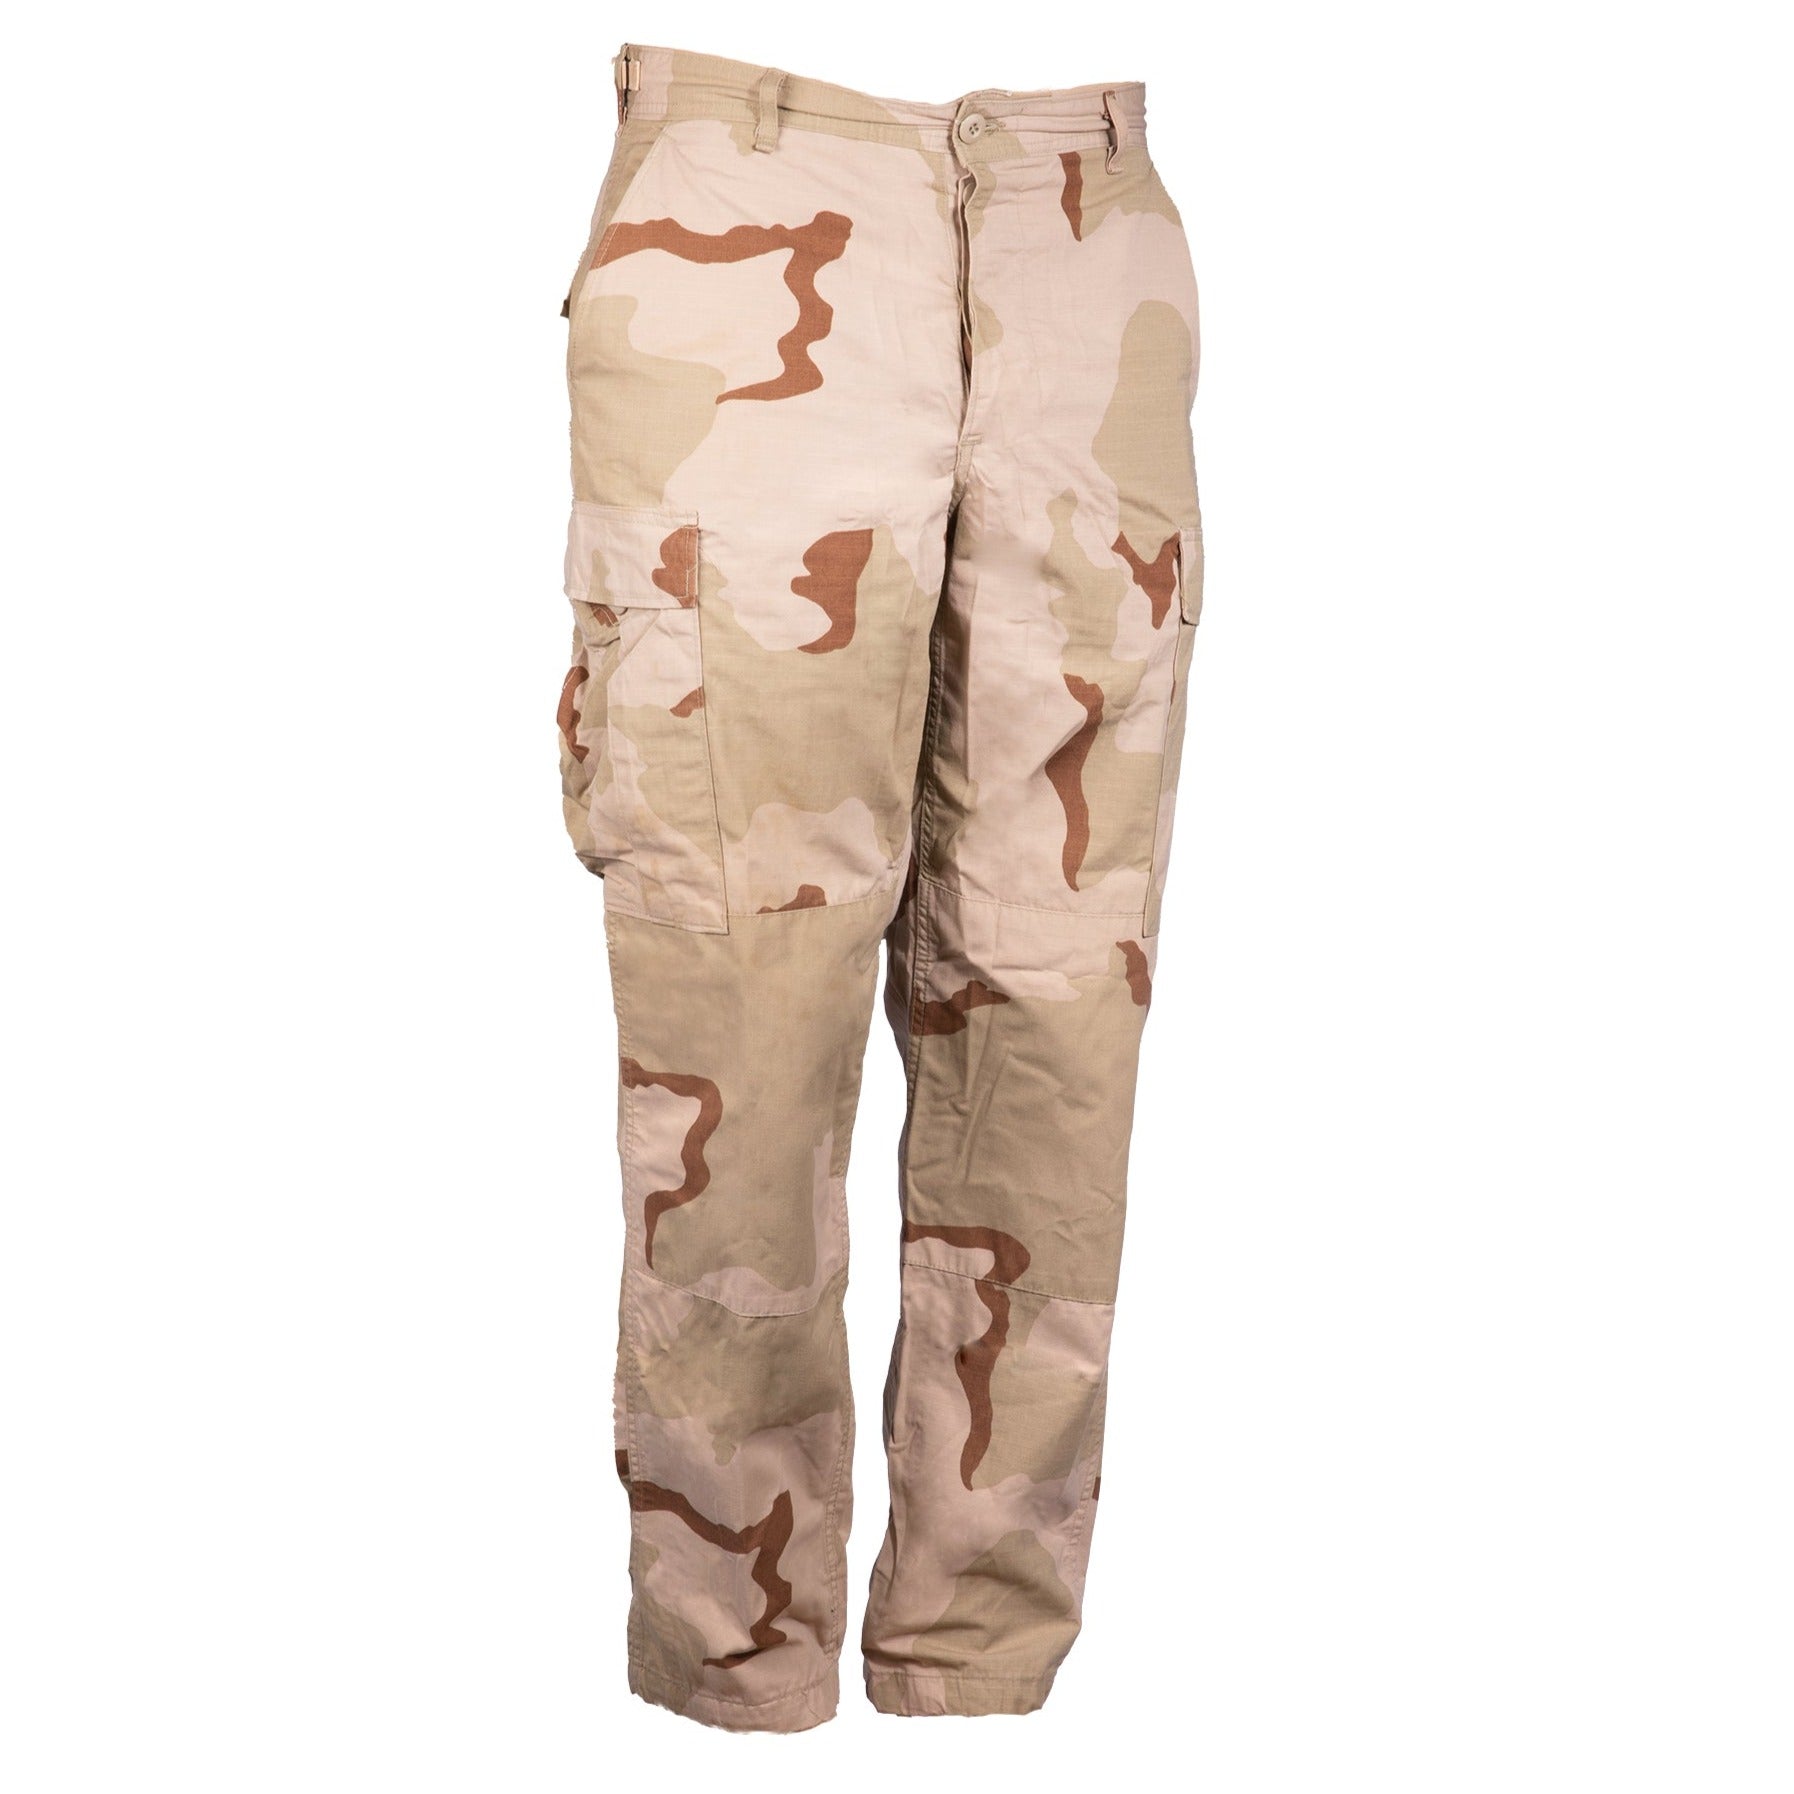 Desert Camo BDU Pants - S, M, XL